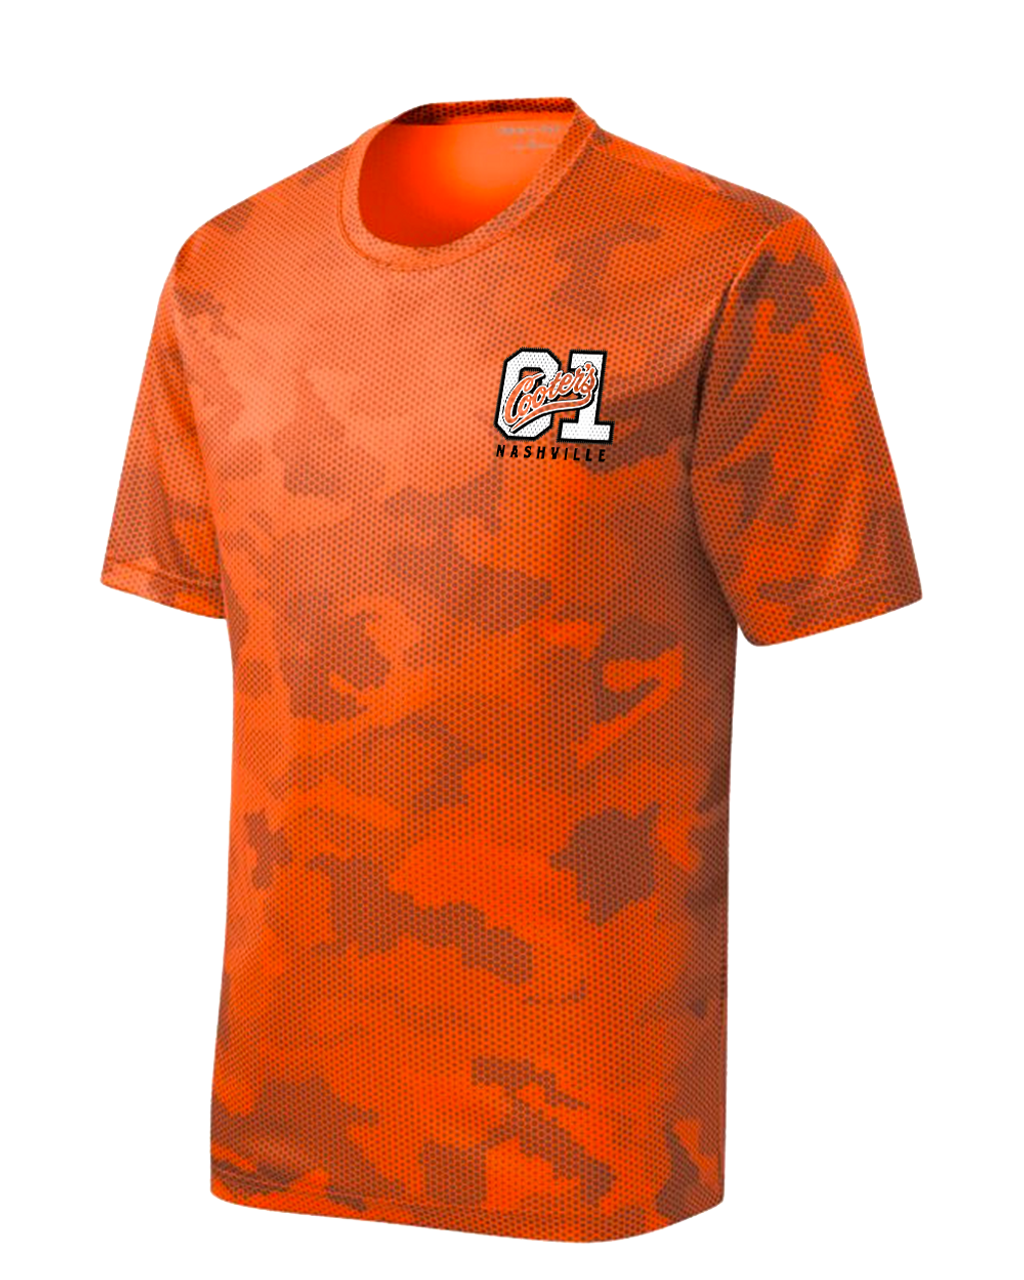 Cooter's 01 Orange Camo T-Shirt